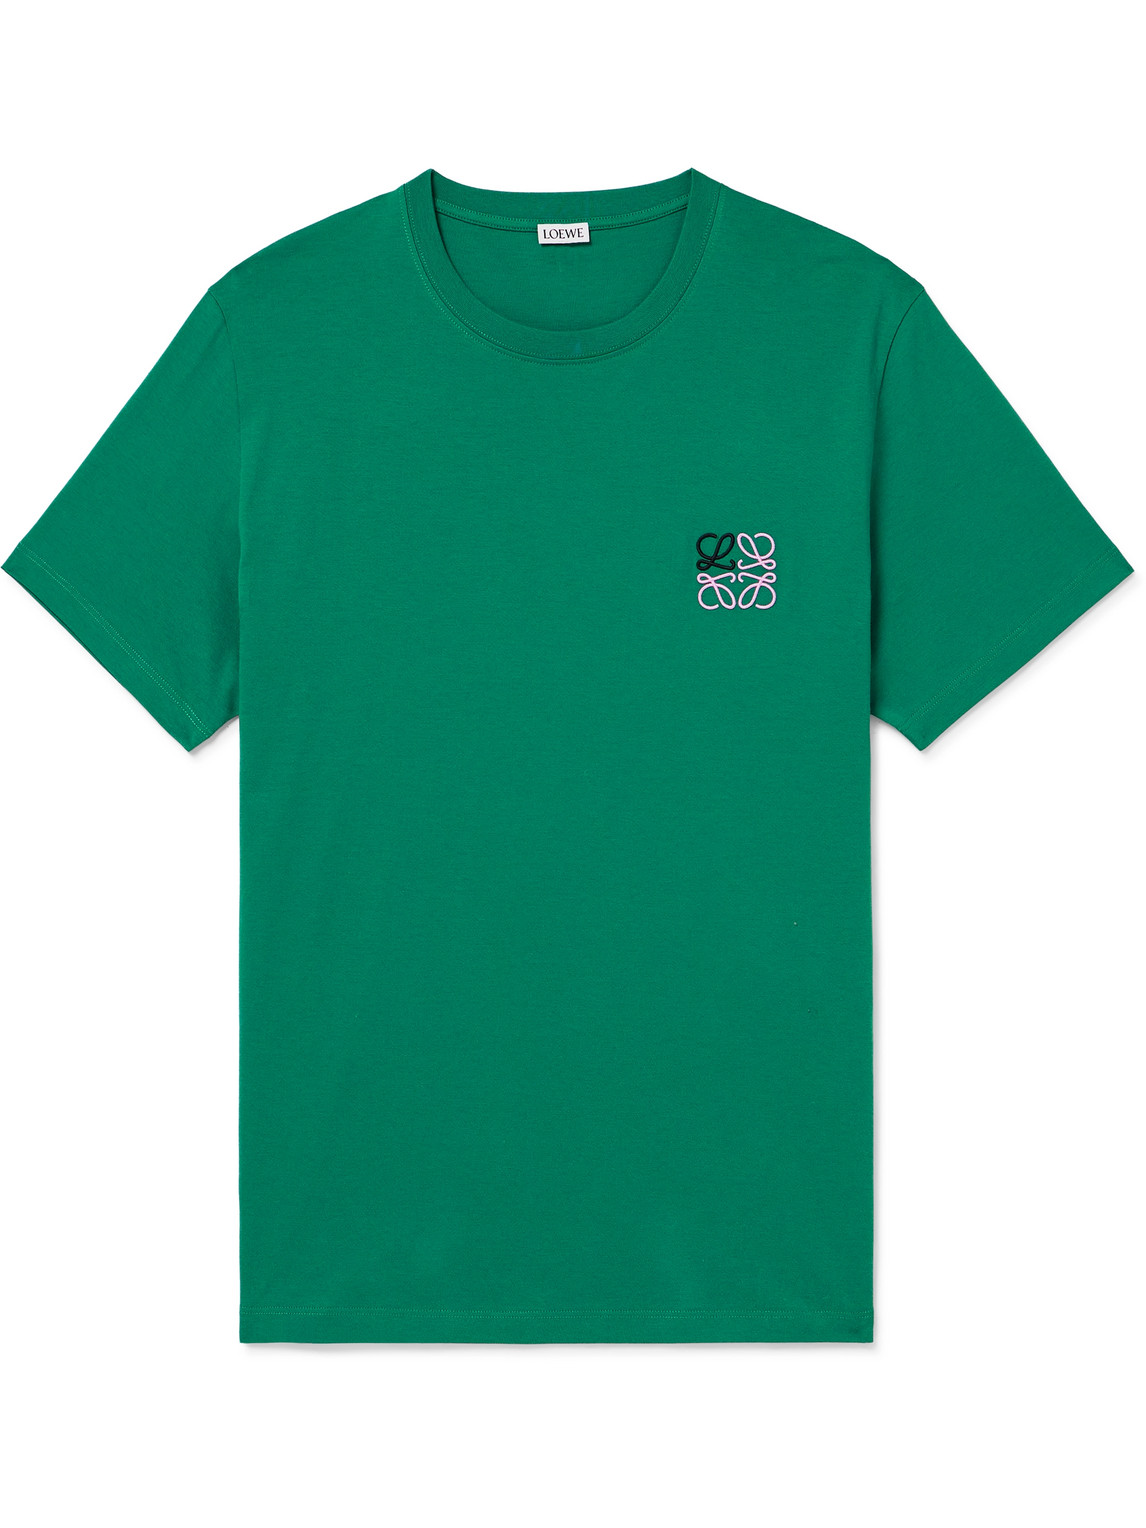 LOEWE - Logo-Embroidered Cotton-Jersey T-Shirt - Men - Green - XS von LOEWE